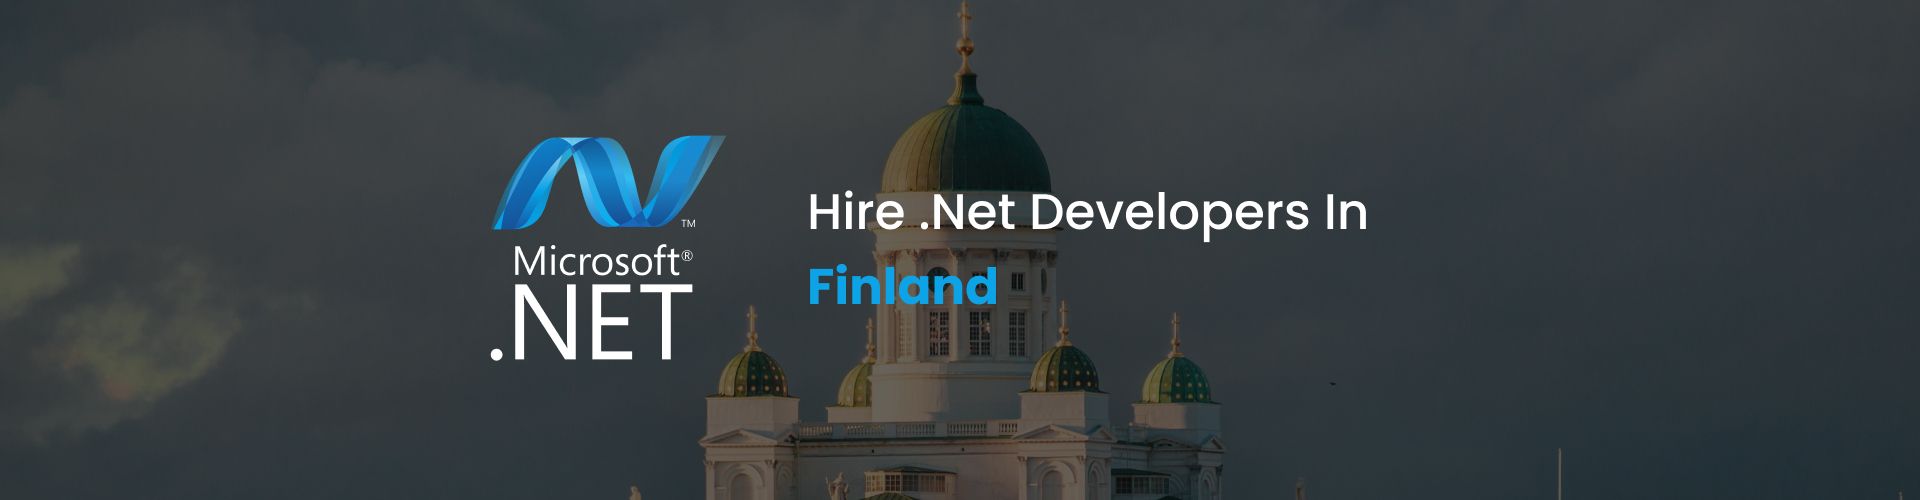 hire .net developers in findland